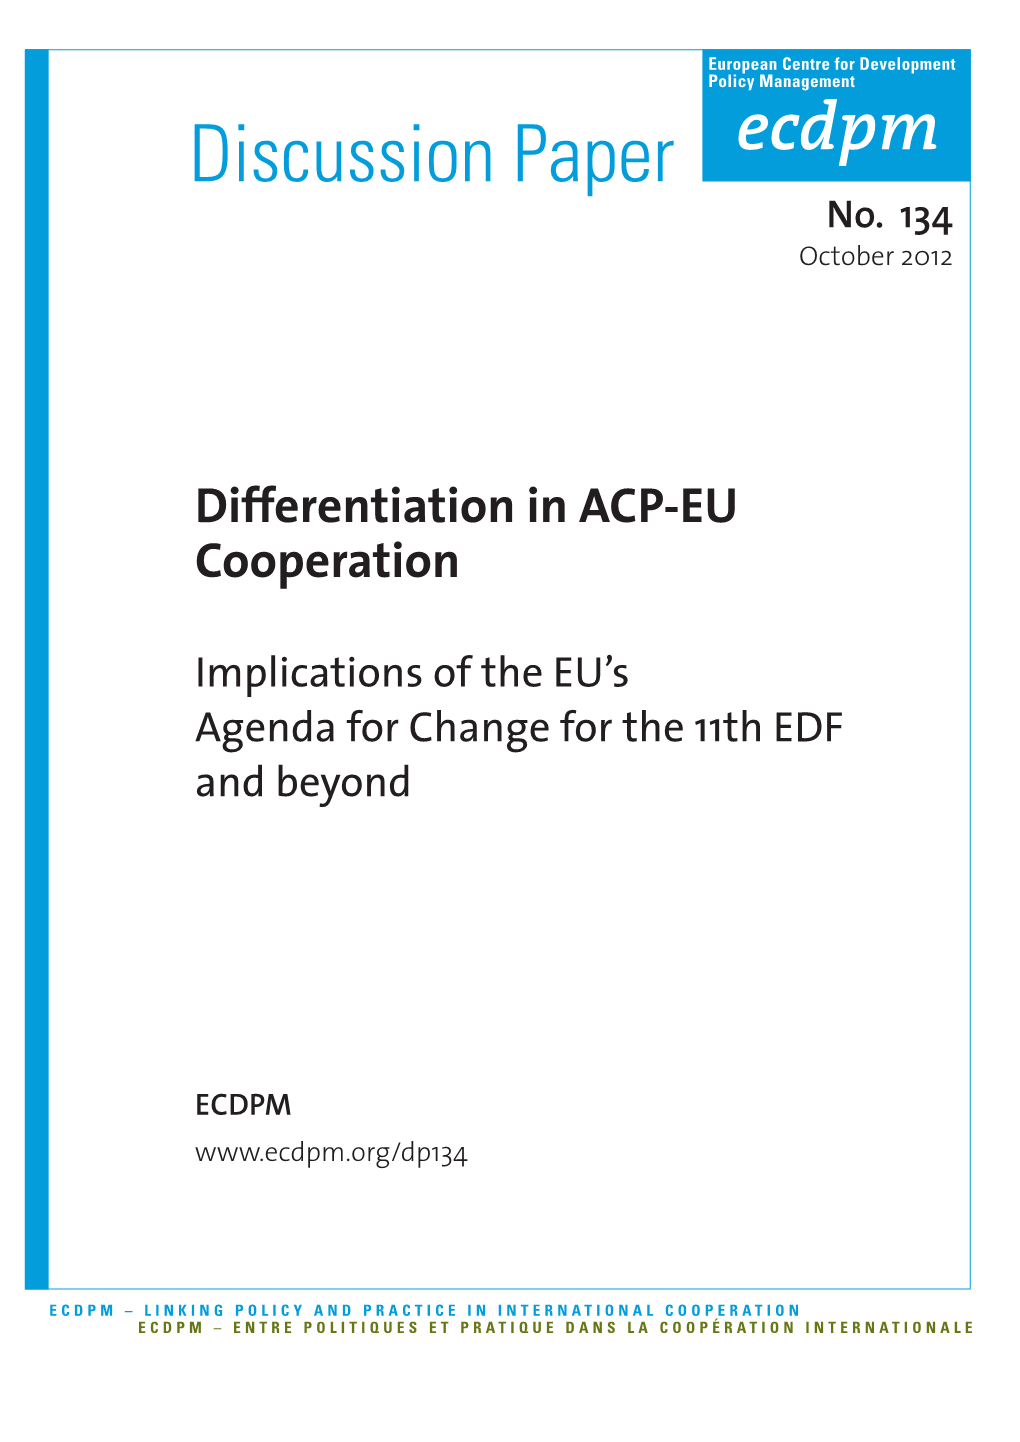 Differentiation in ACP-EU Cooperation